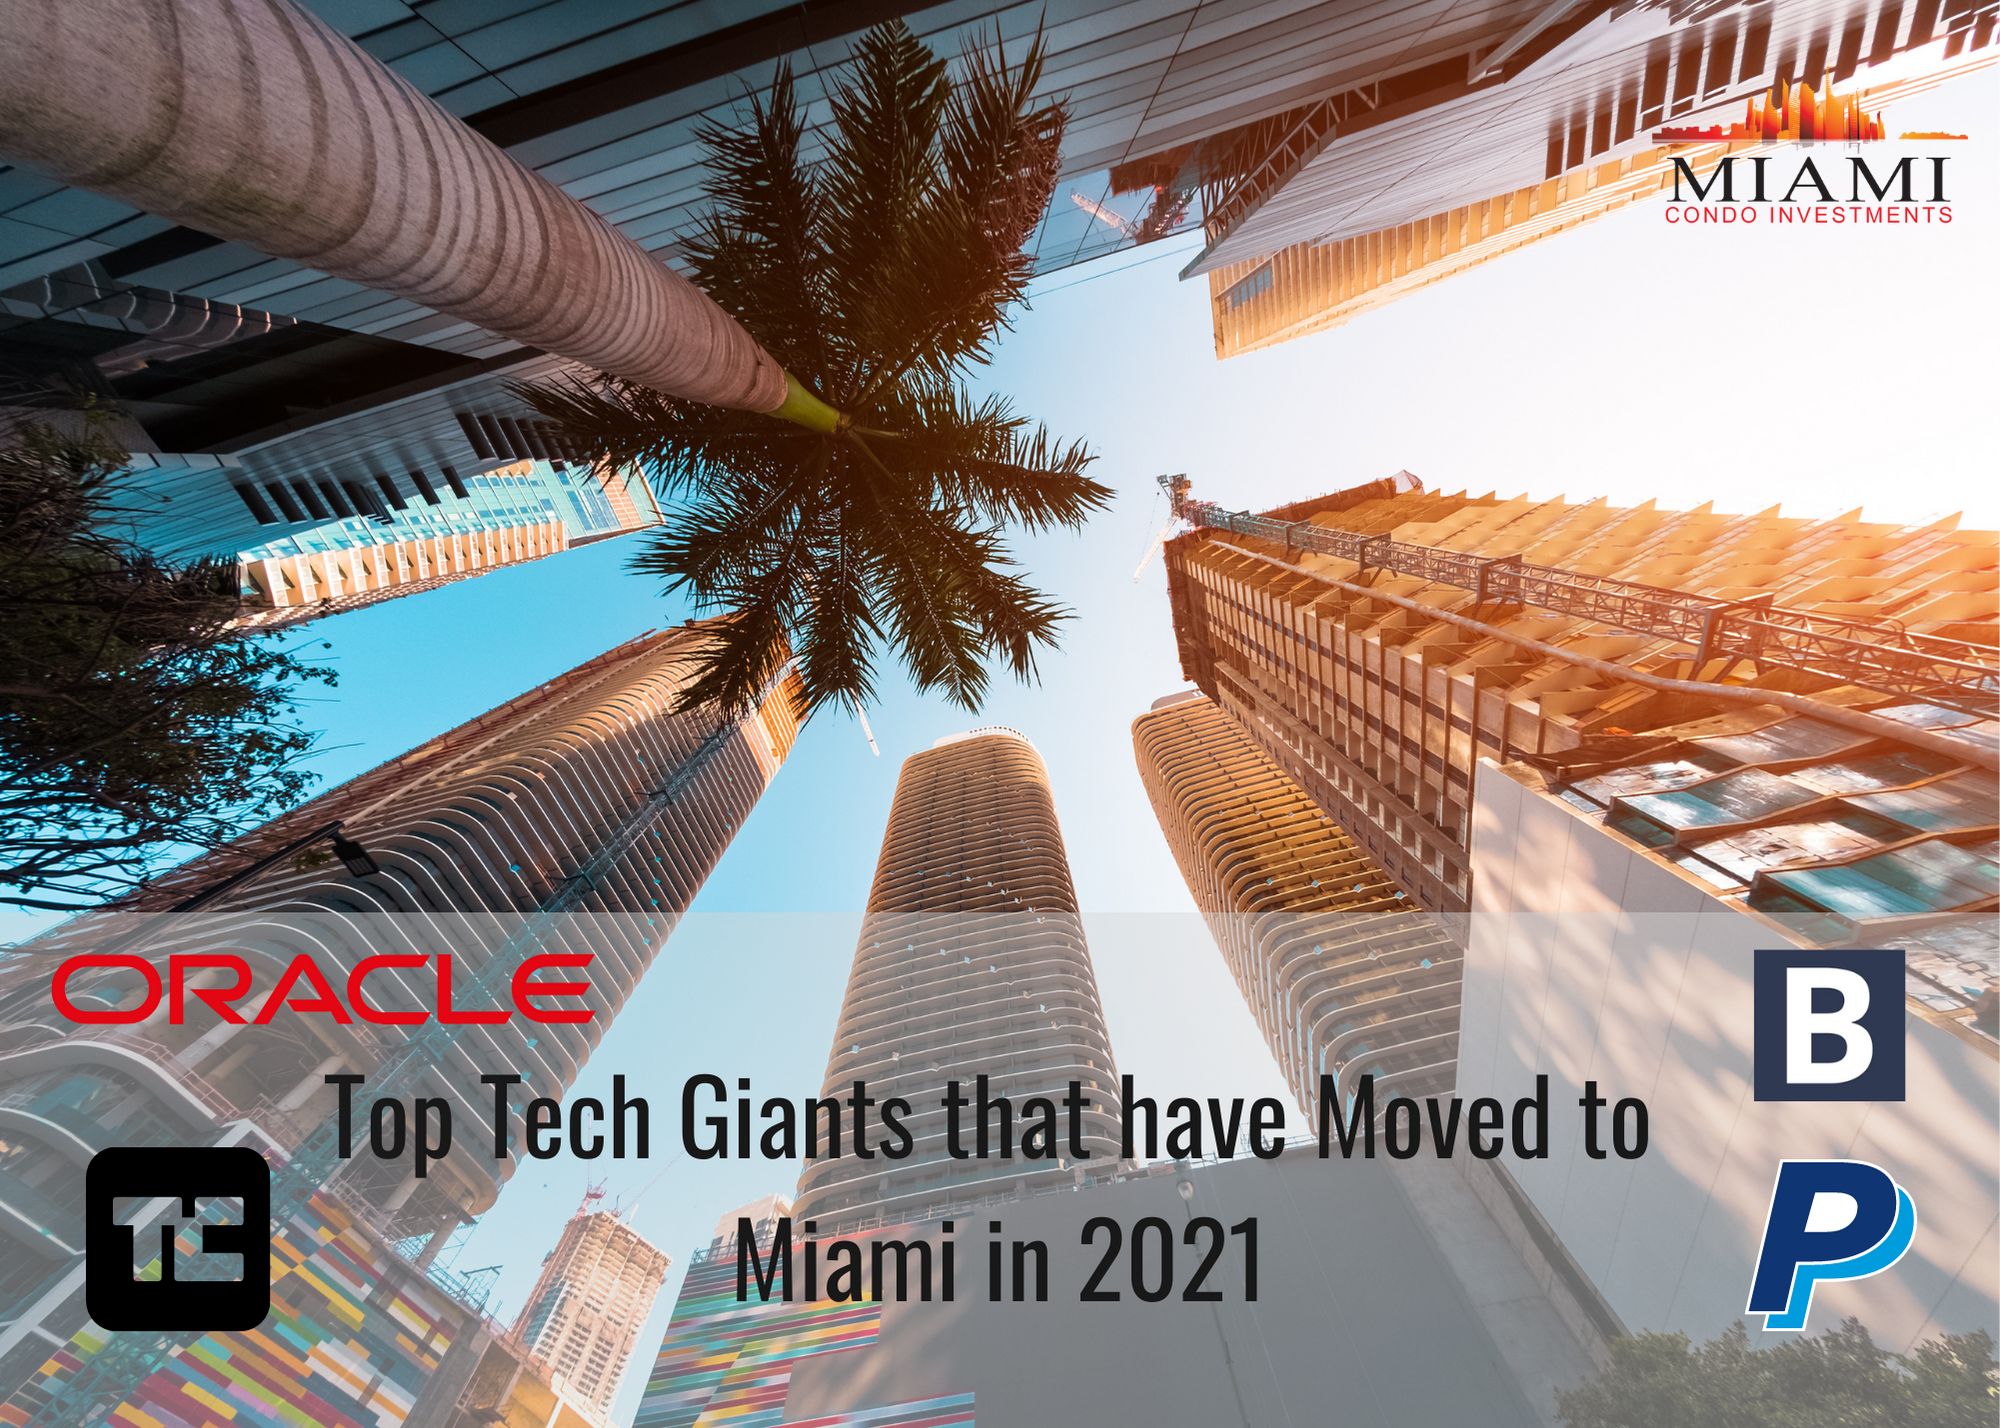 Top Tech Giants in Miami